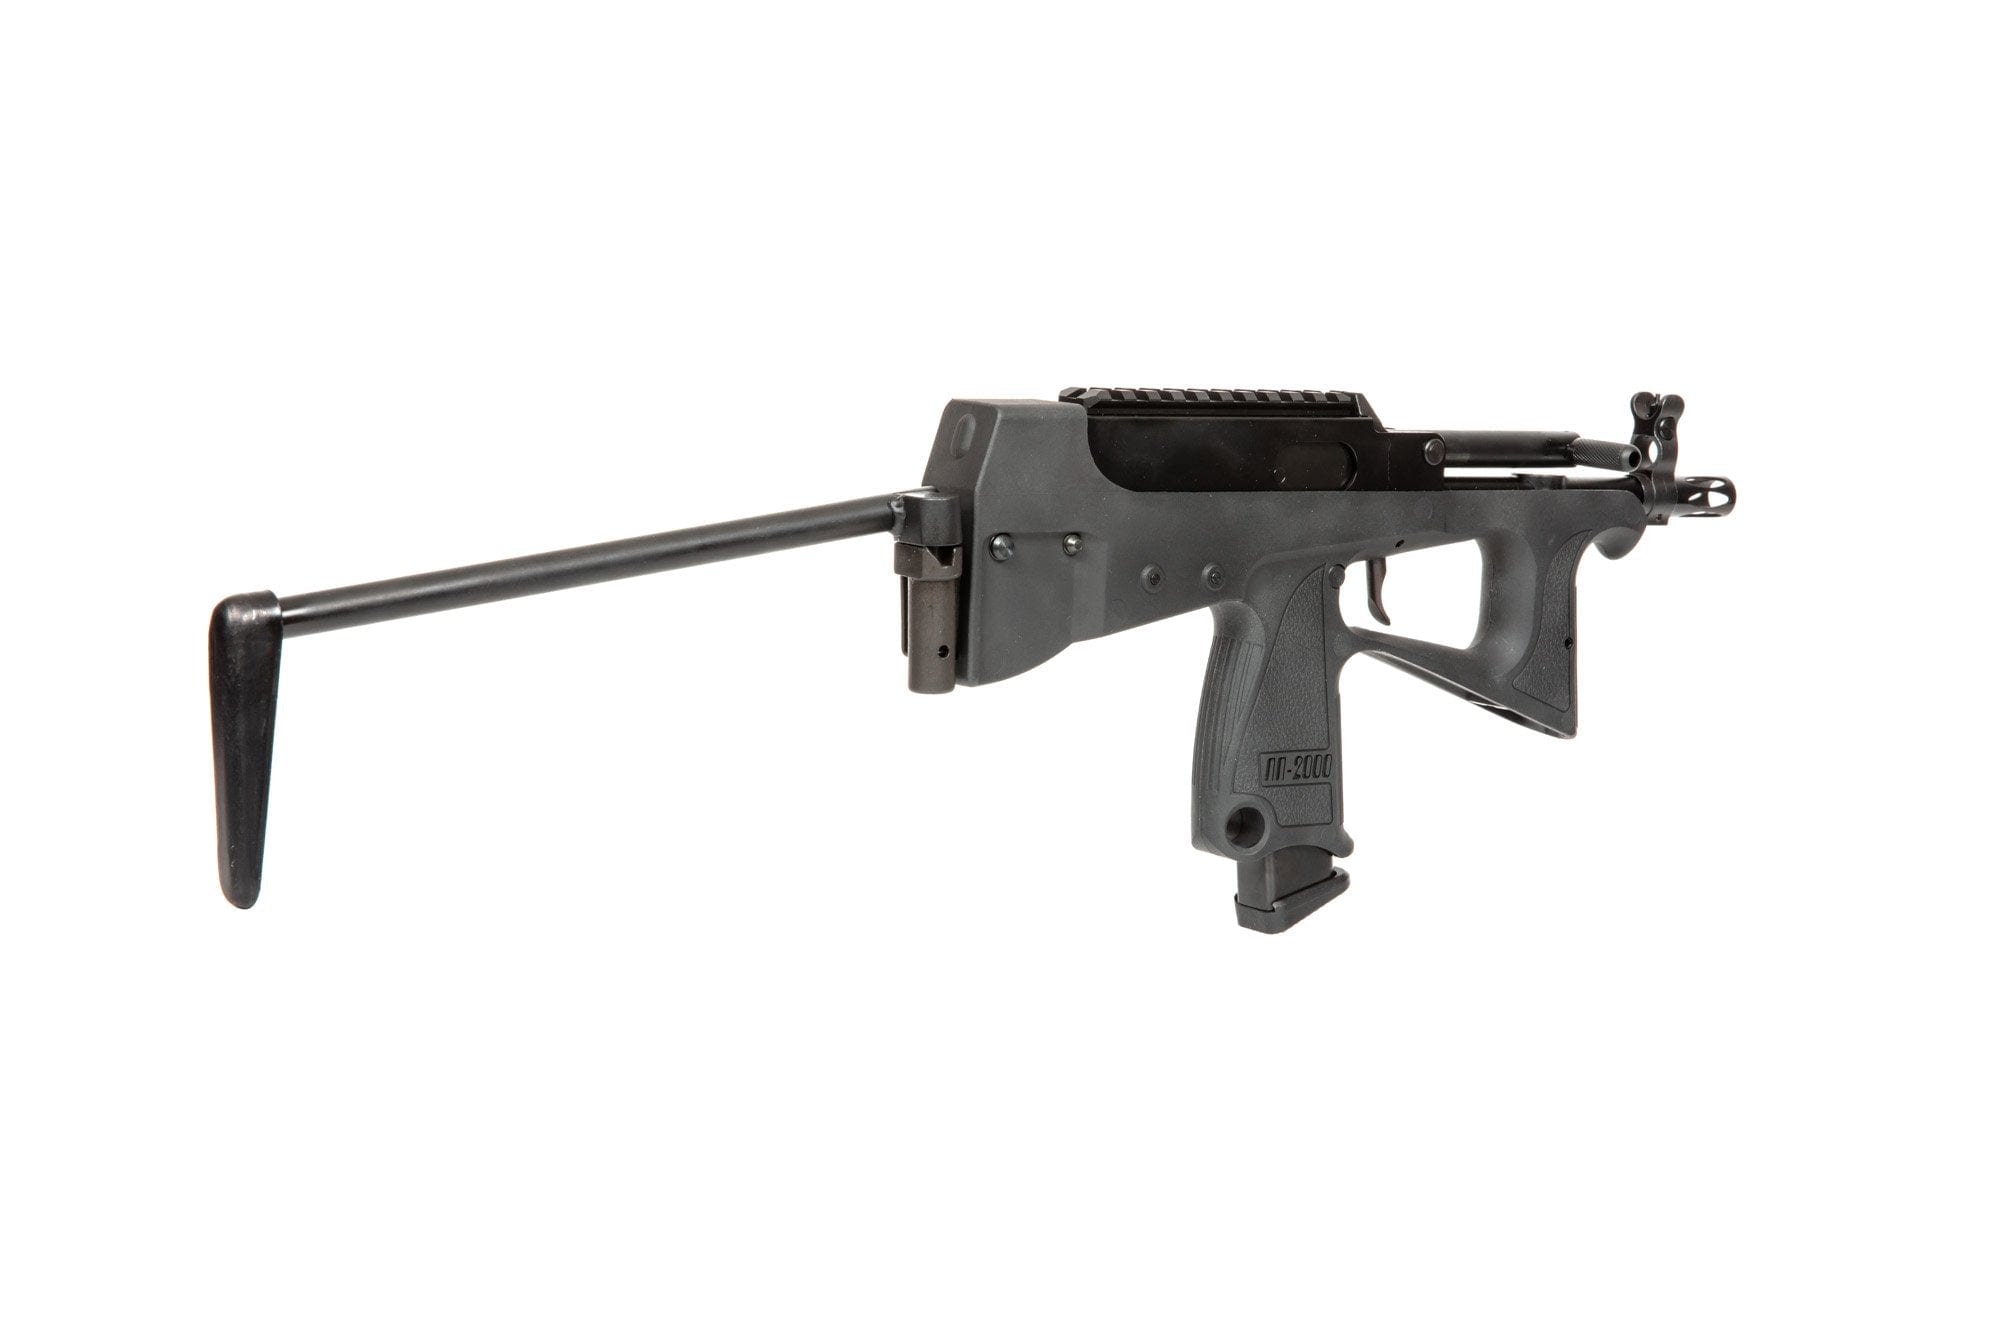 PP-2K 9mm (Green Gas) submachine gun Replica by Modify on Airsoft Mania Europe